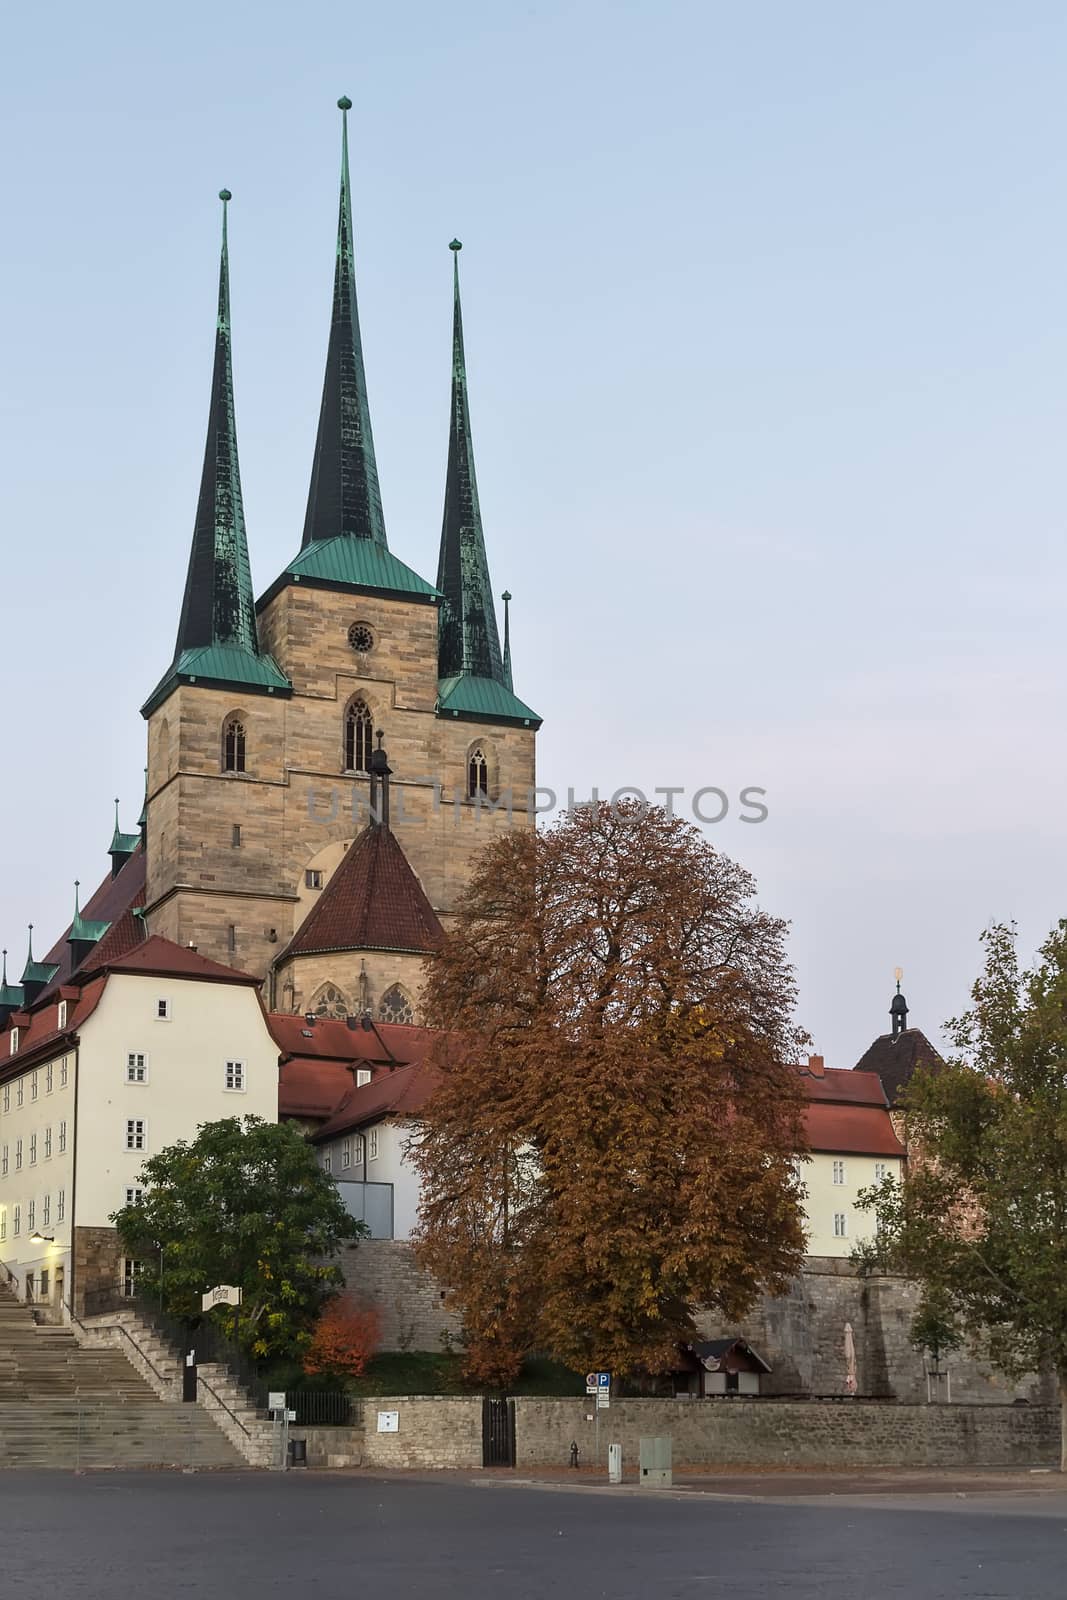 Severikirche in Erfurt, Germany by borisb17